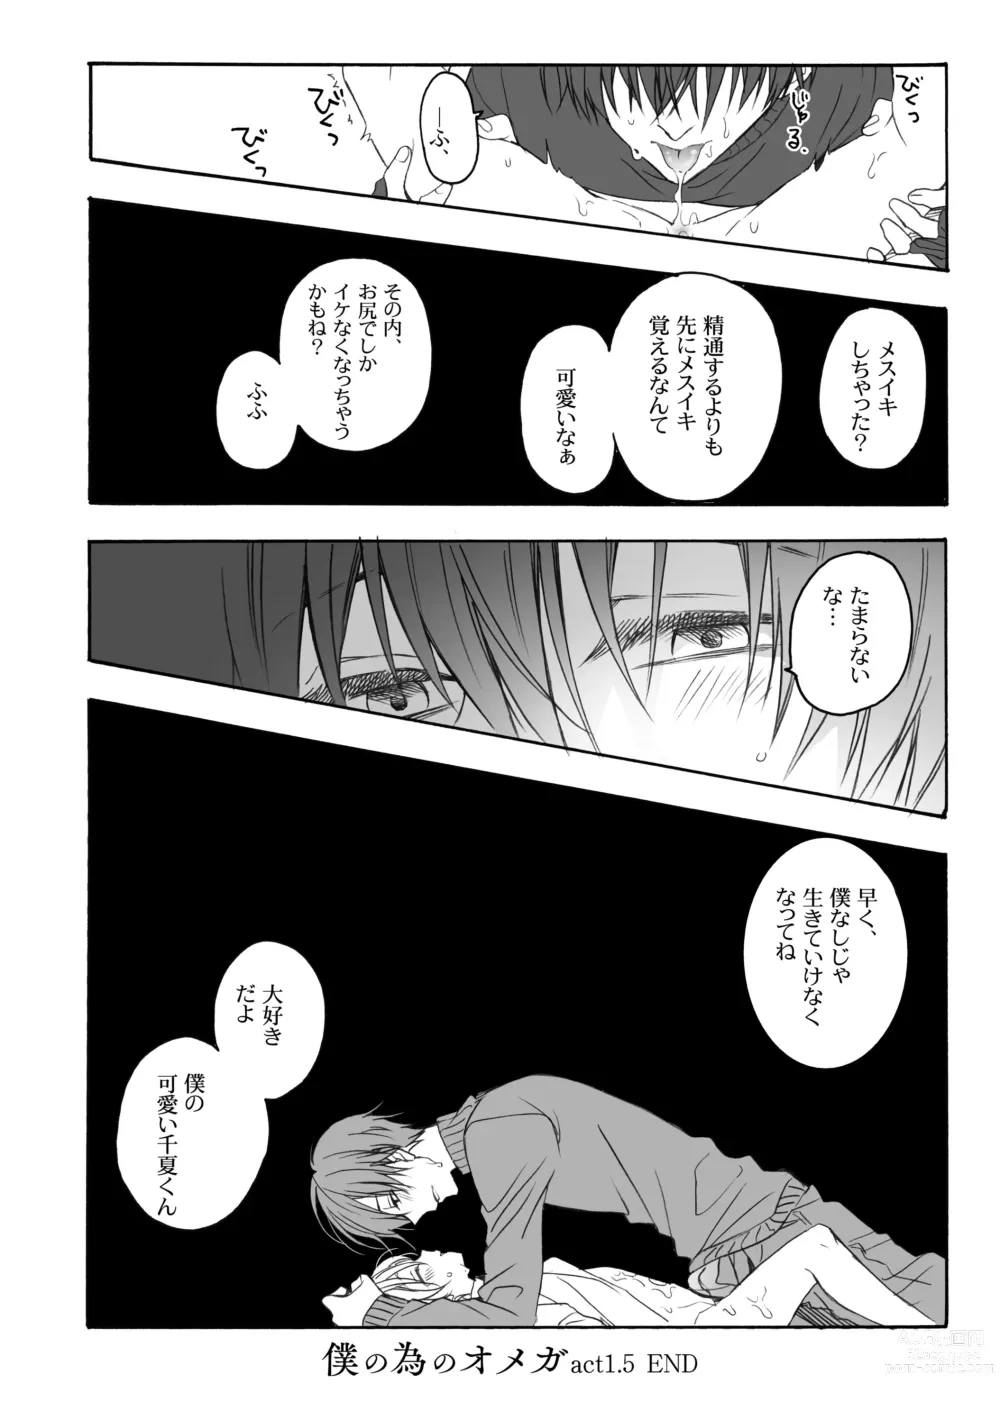 Page 89 of manga Boku no Tame no Omega